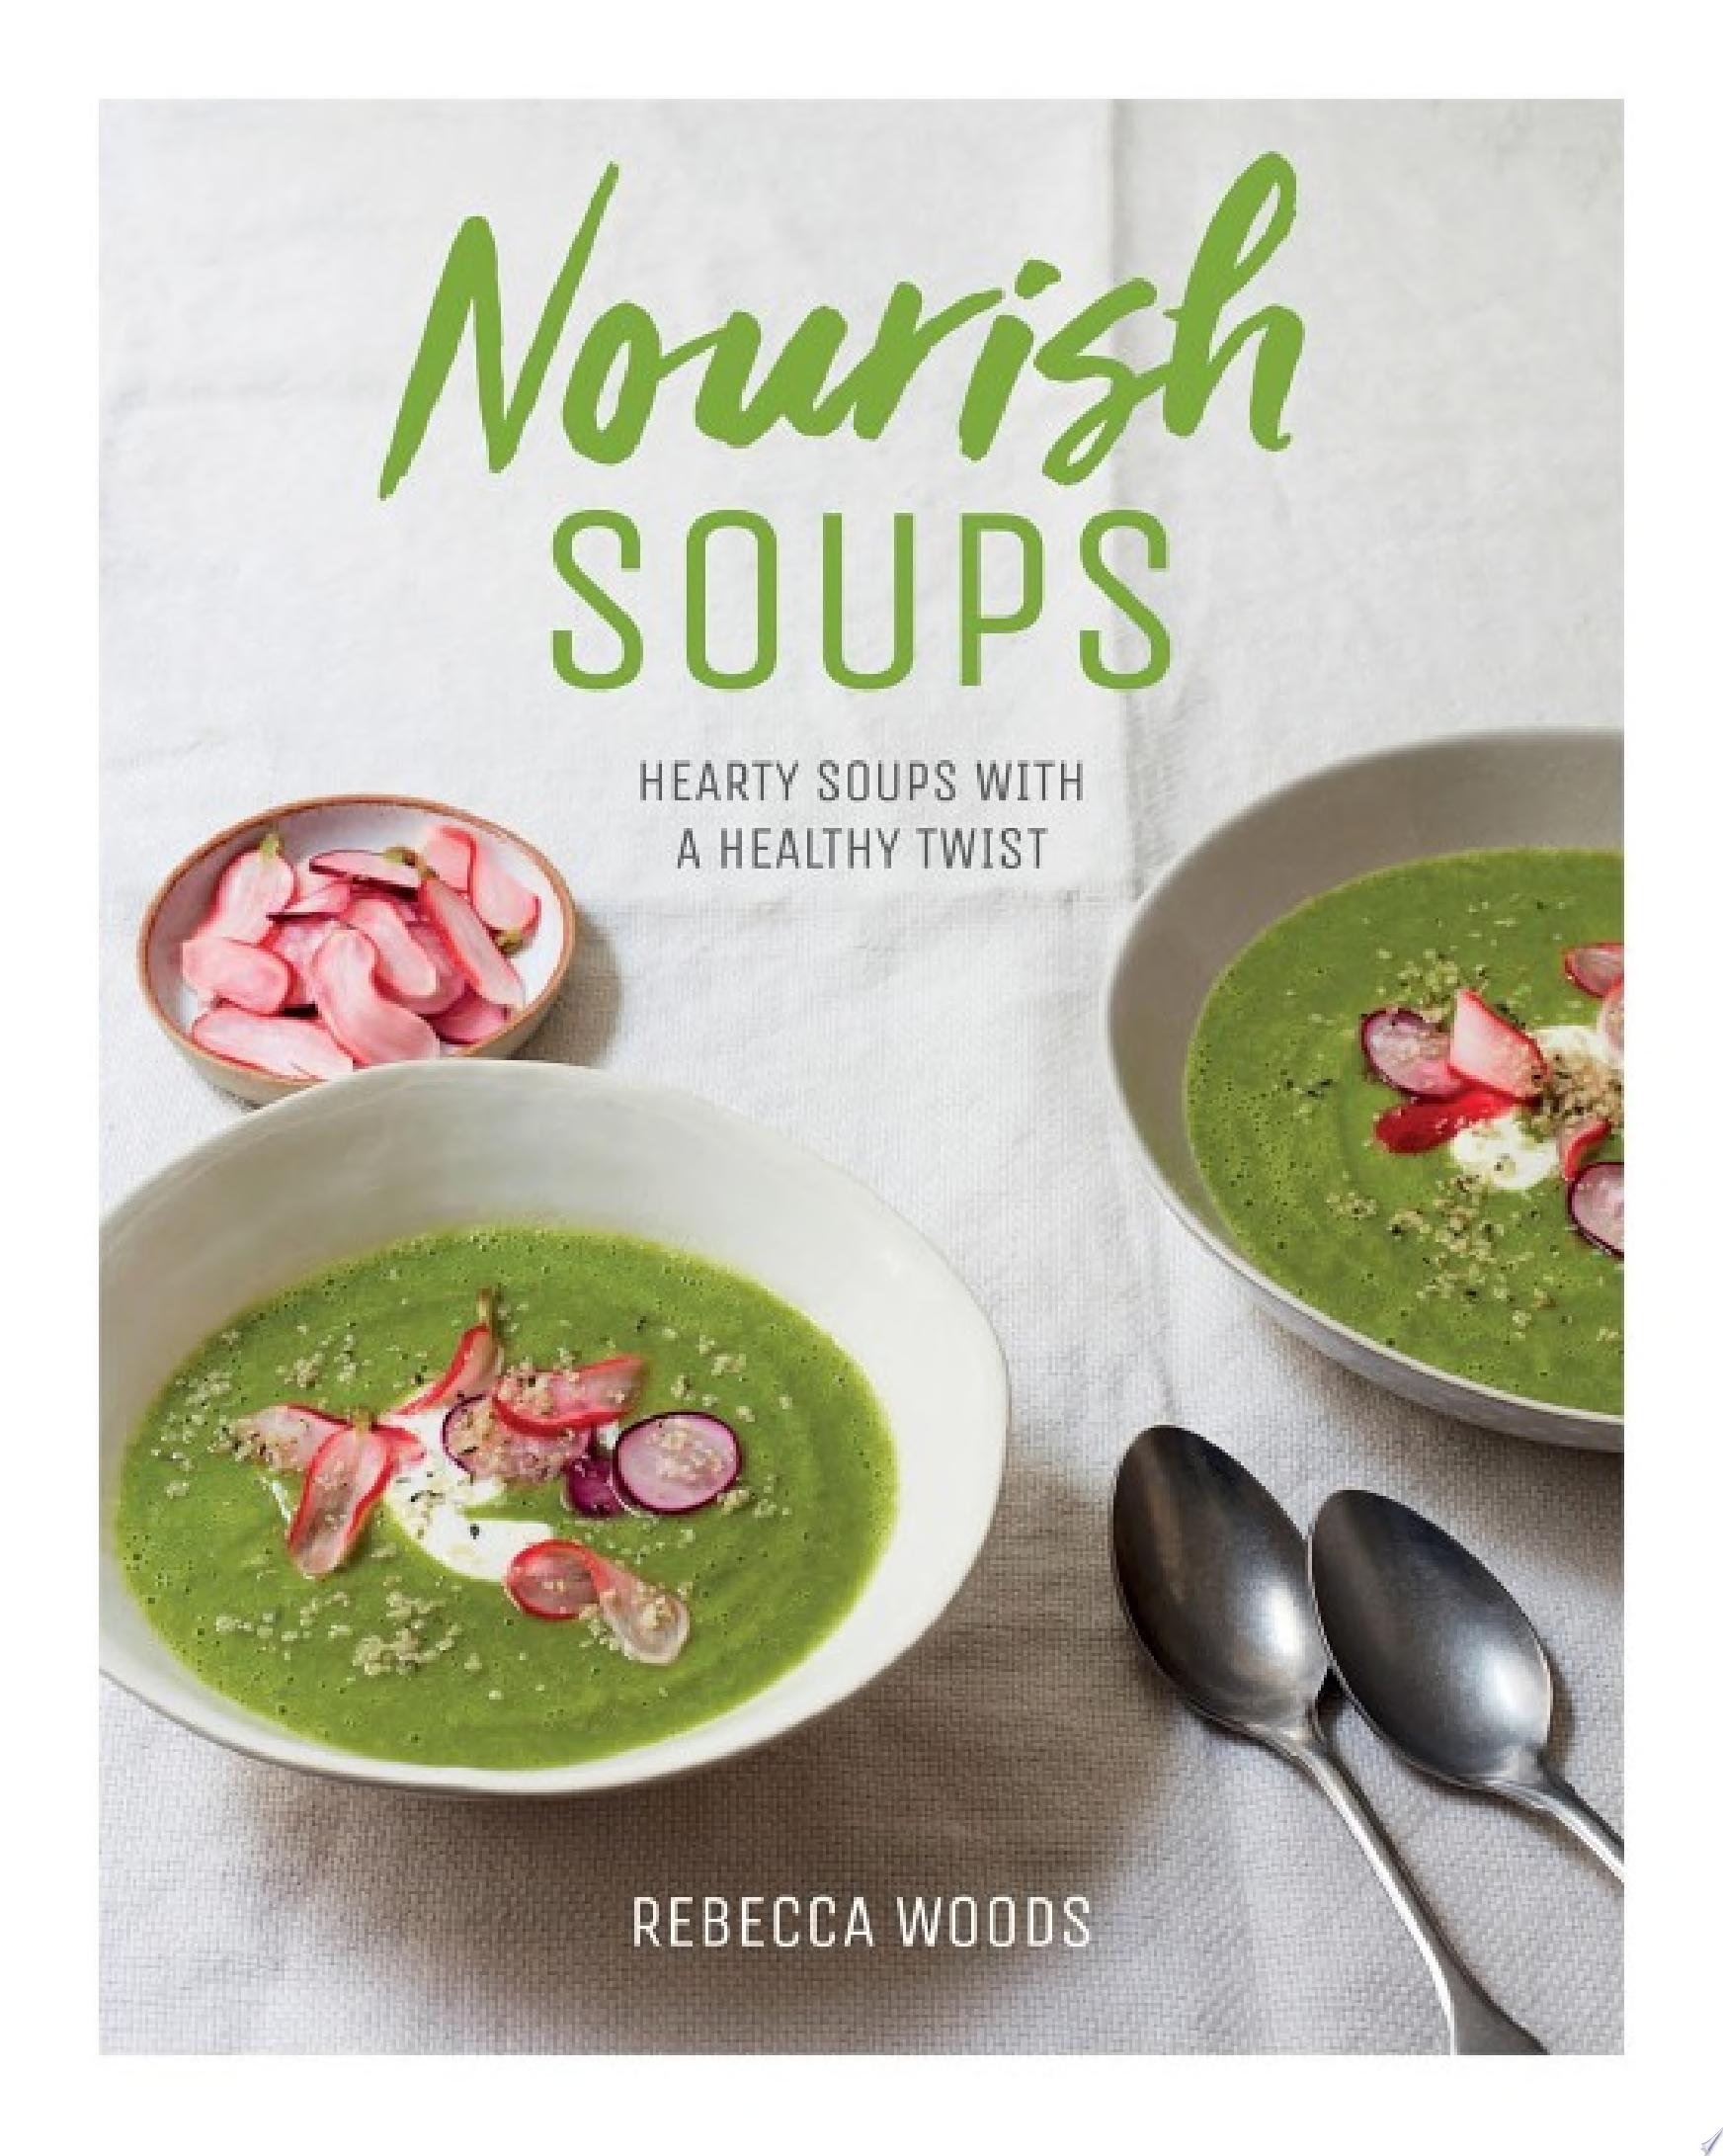 Image for "Nourish Soups"